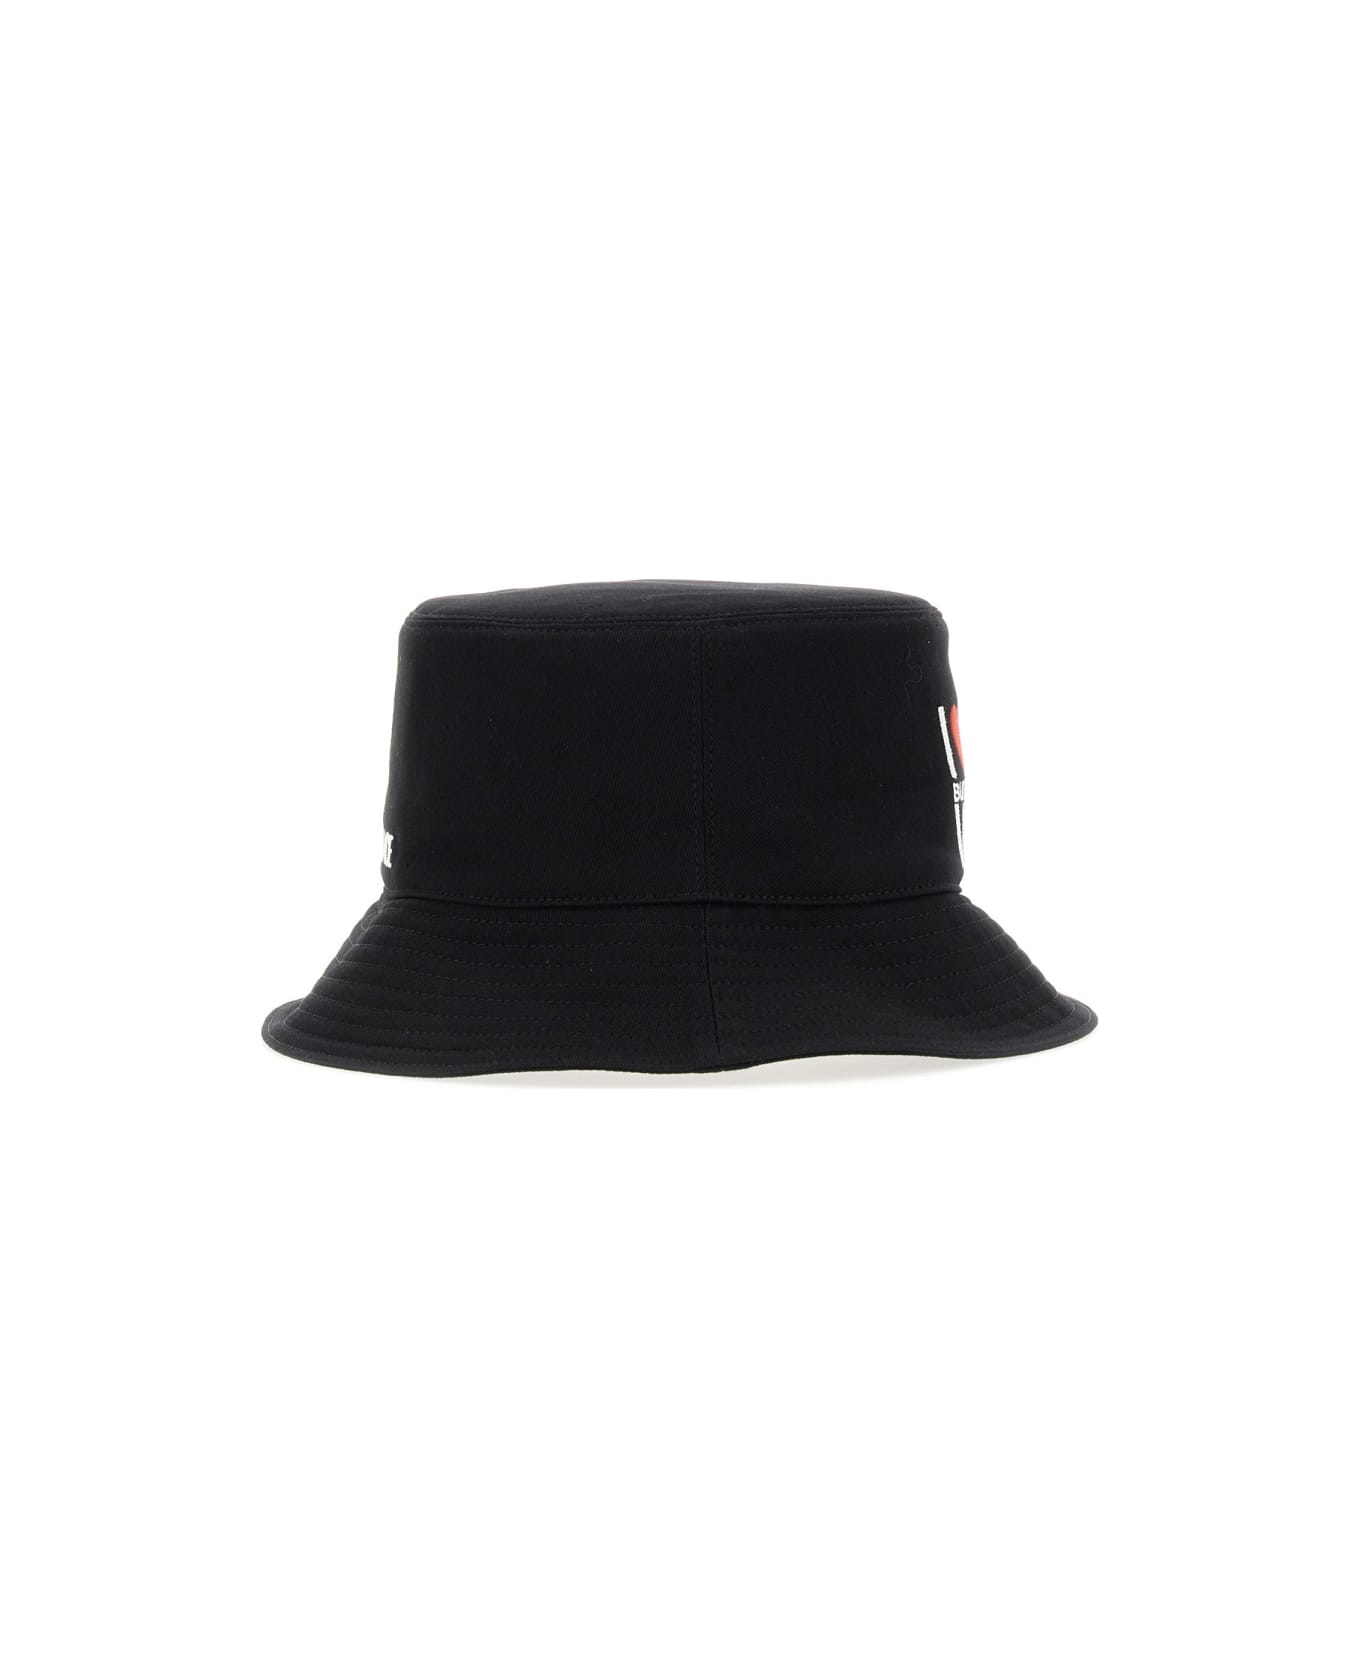 Versace Fisherman Hat "i You But..." - BLACK